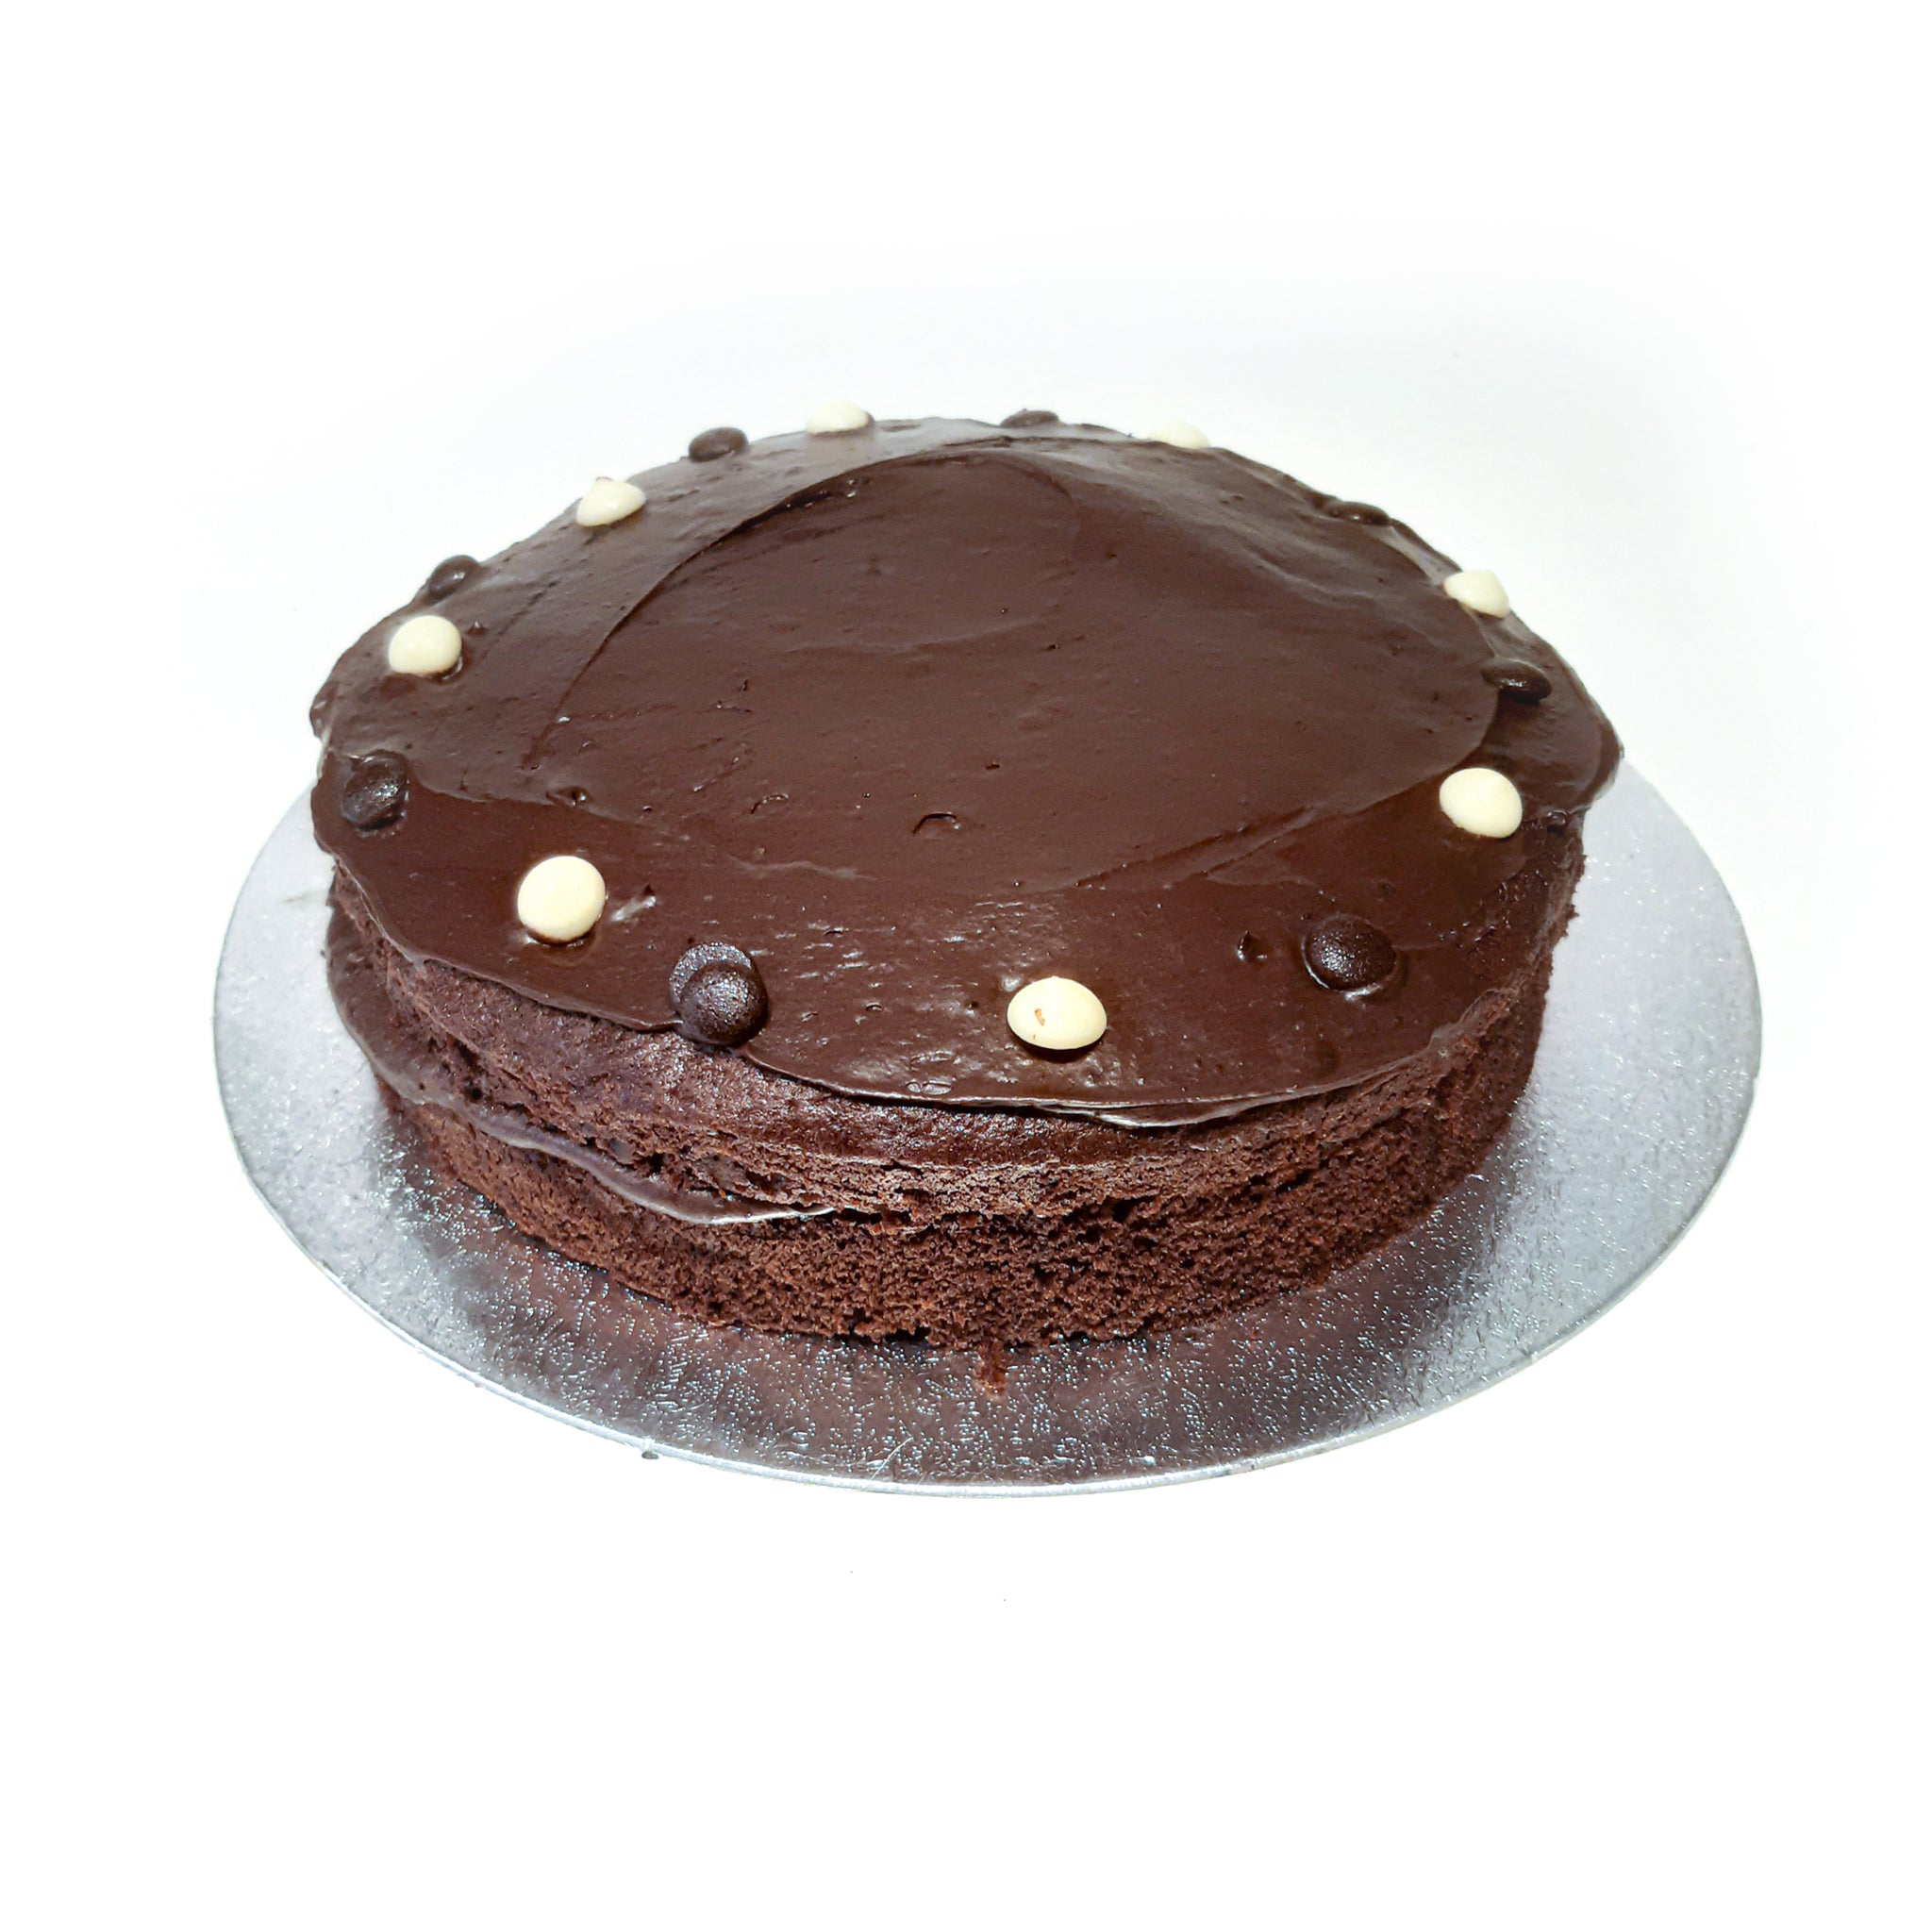 CHOCOLATE CAKE, 8 inch.